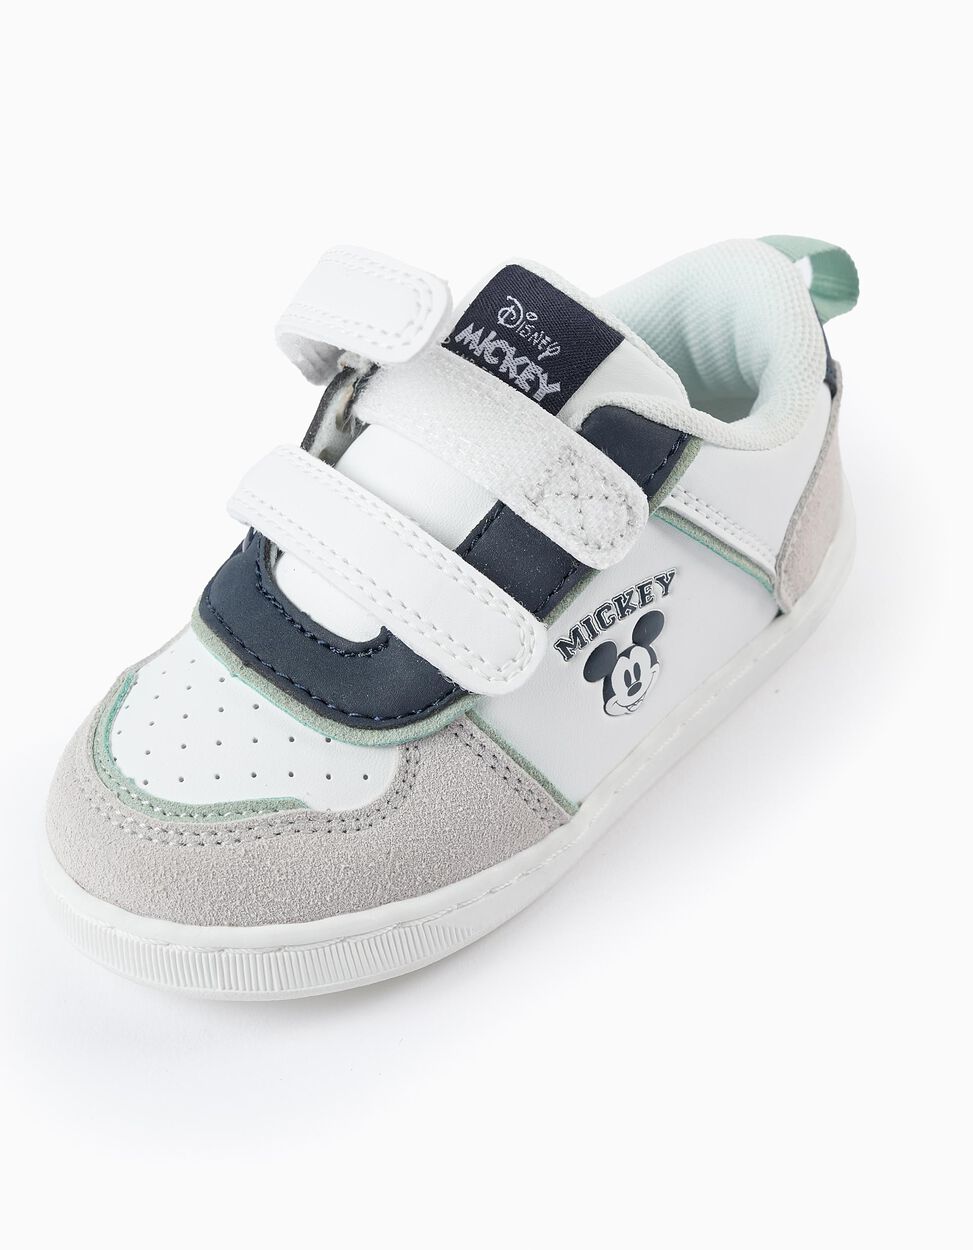 Comprar Online Sapatilhas para Bebé Menino 'Mickey', Branco/Azul/Verde